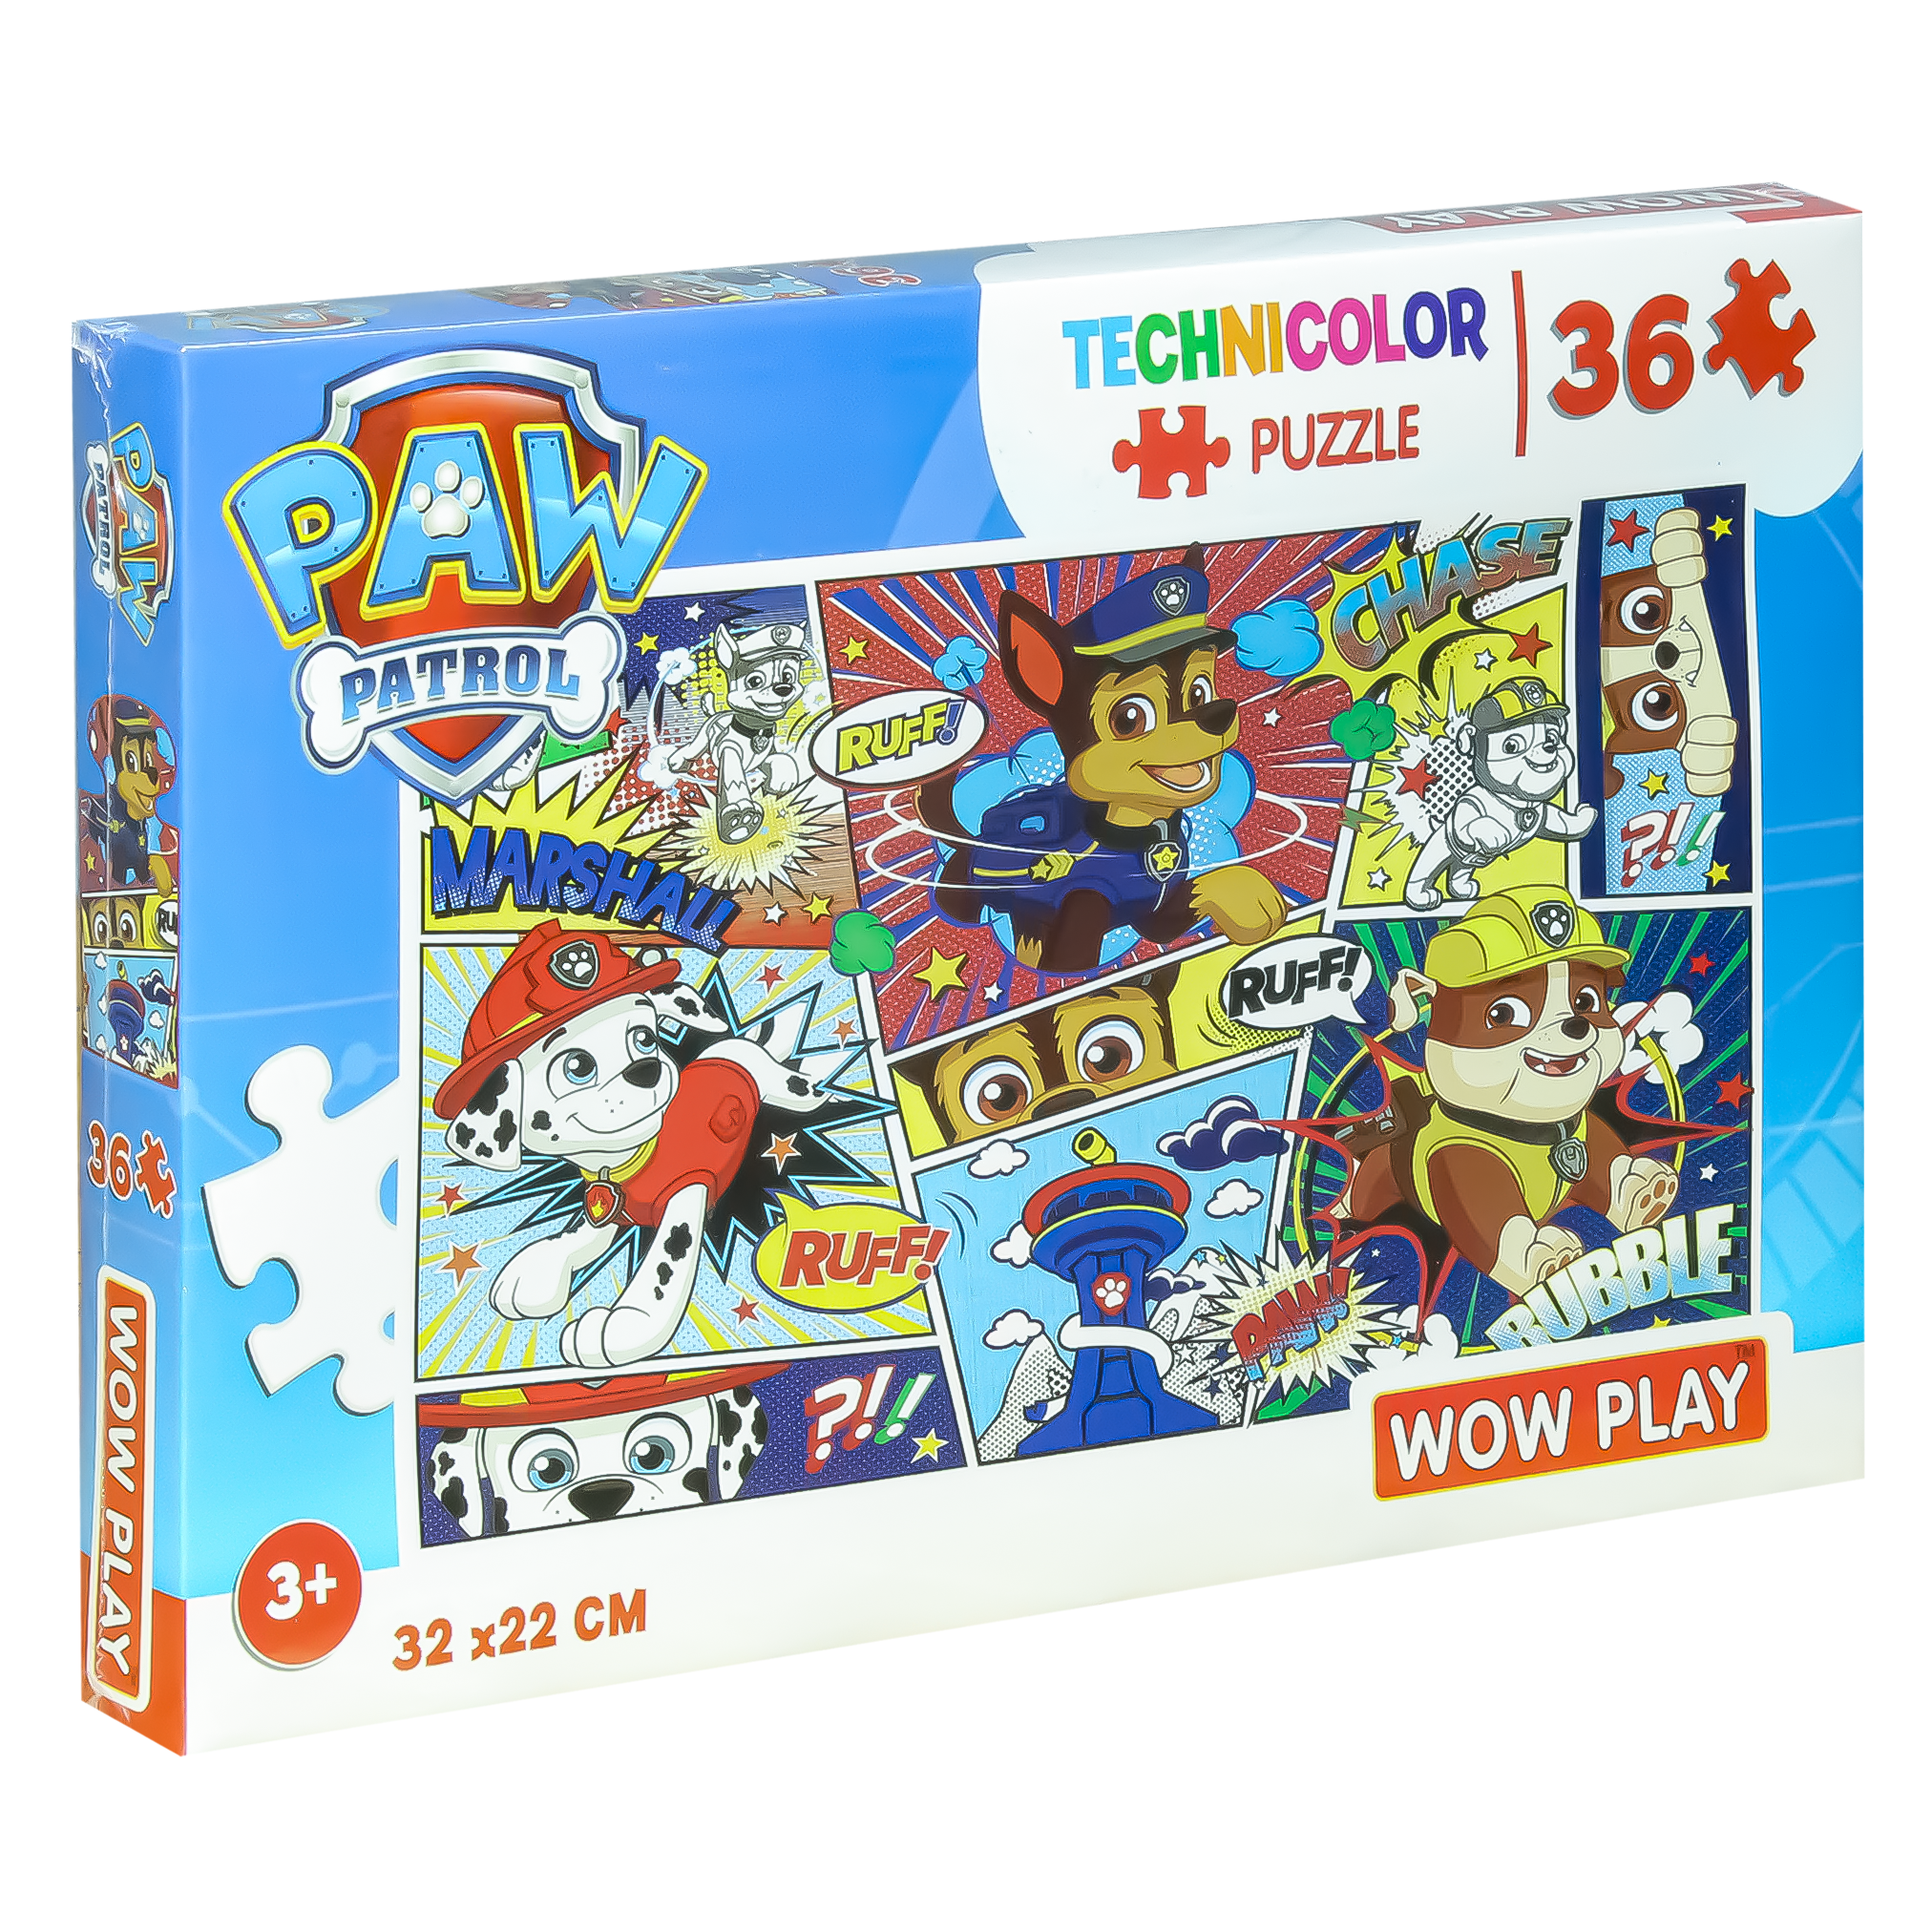 Wow Play Technicolour Puzzle 36 pieces PAW PATROL